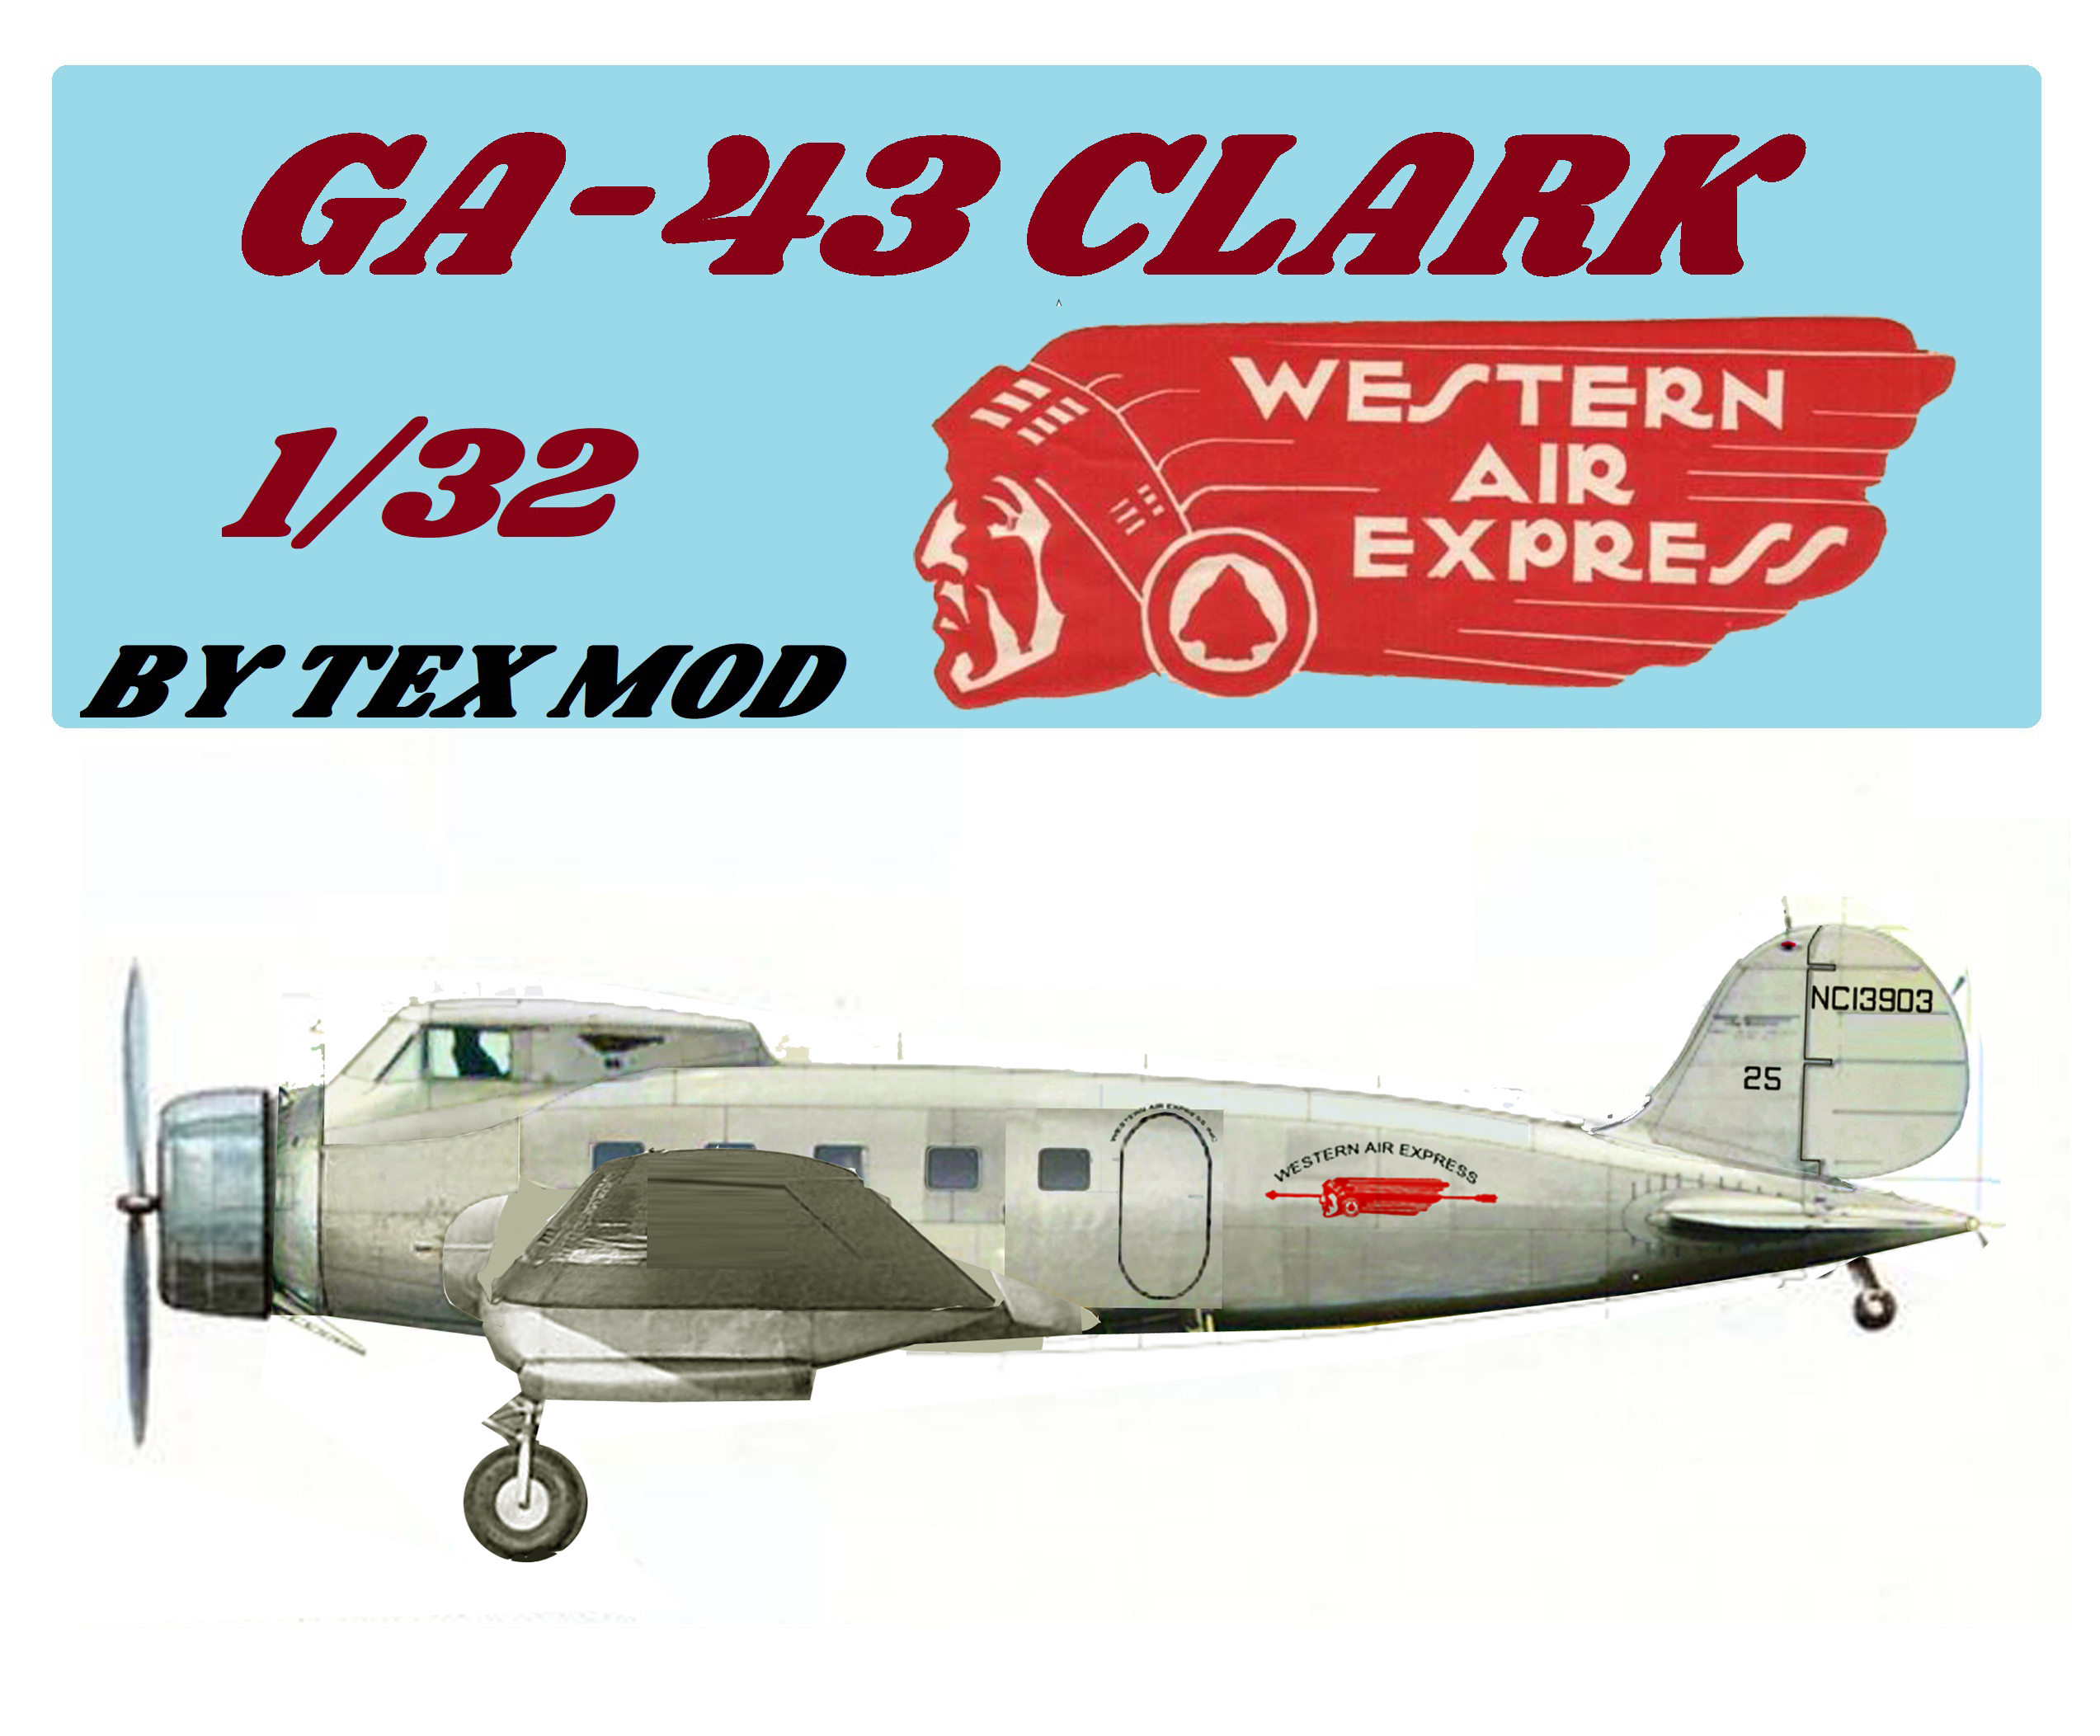 SOVA Models 1/72 GENERAL AVIATION Ga-43 CLARK Western Air Express